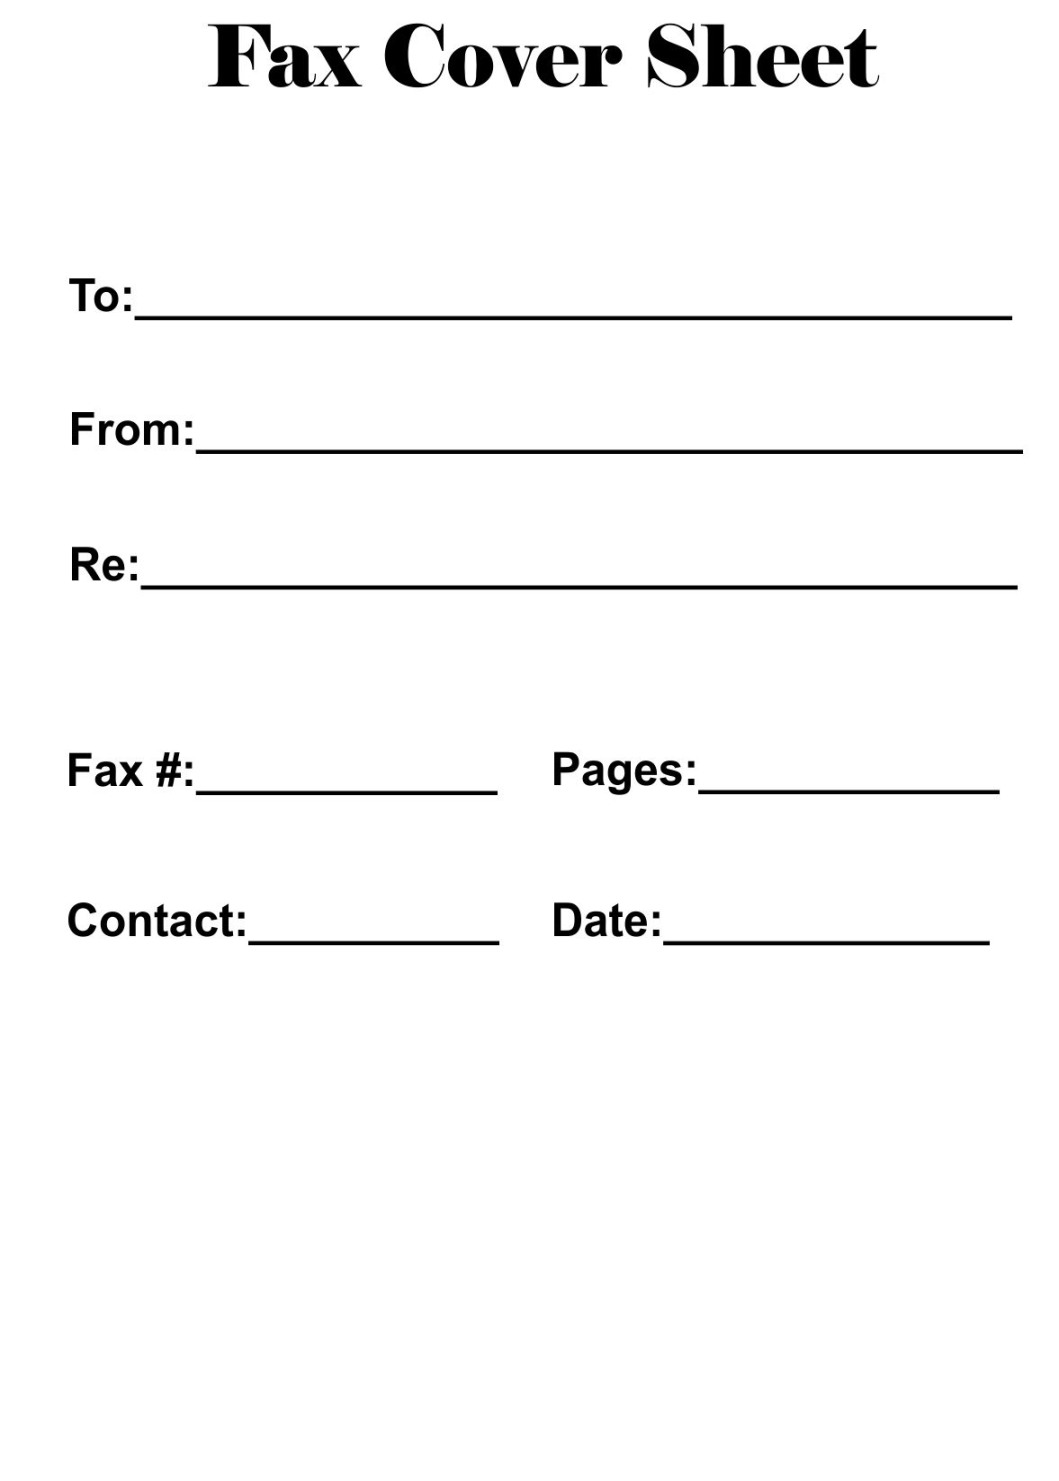 Free Printable Fax Cover Sheet - Free Printable Calendar Templates